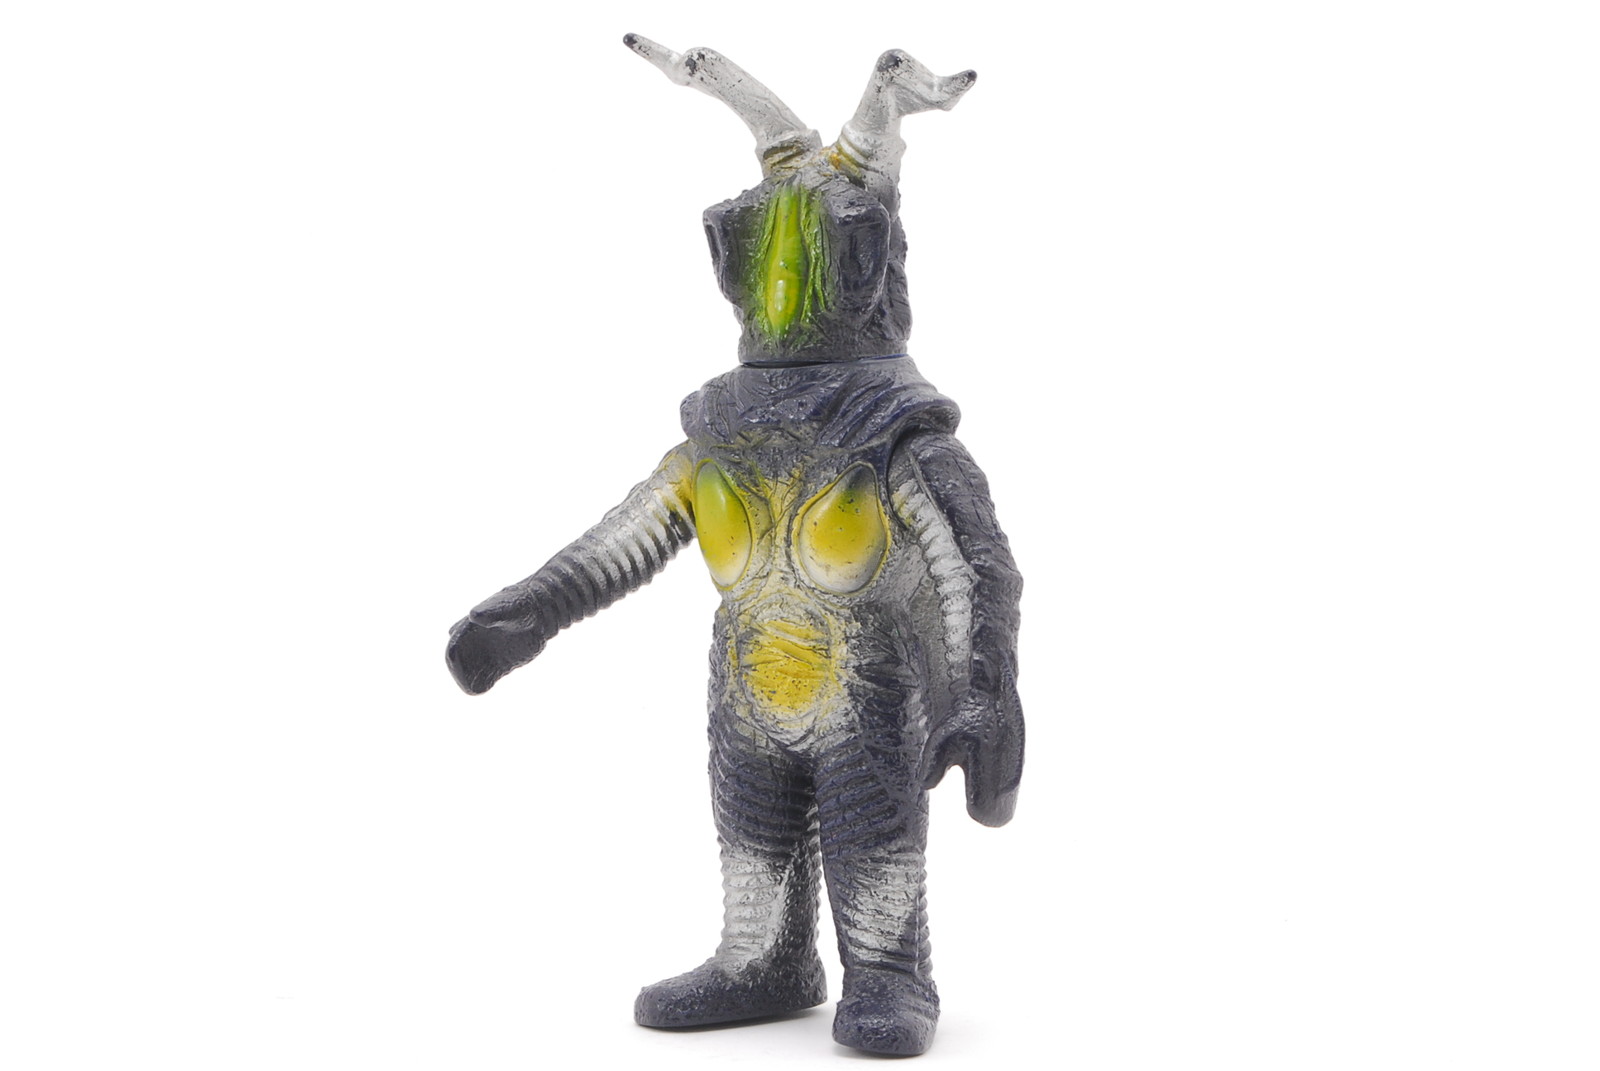 PROMOTION. NEAR MINT POPY ZETTON Sofubi King Zaurus Series Ultraman Kaiju Figure from Japan